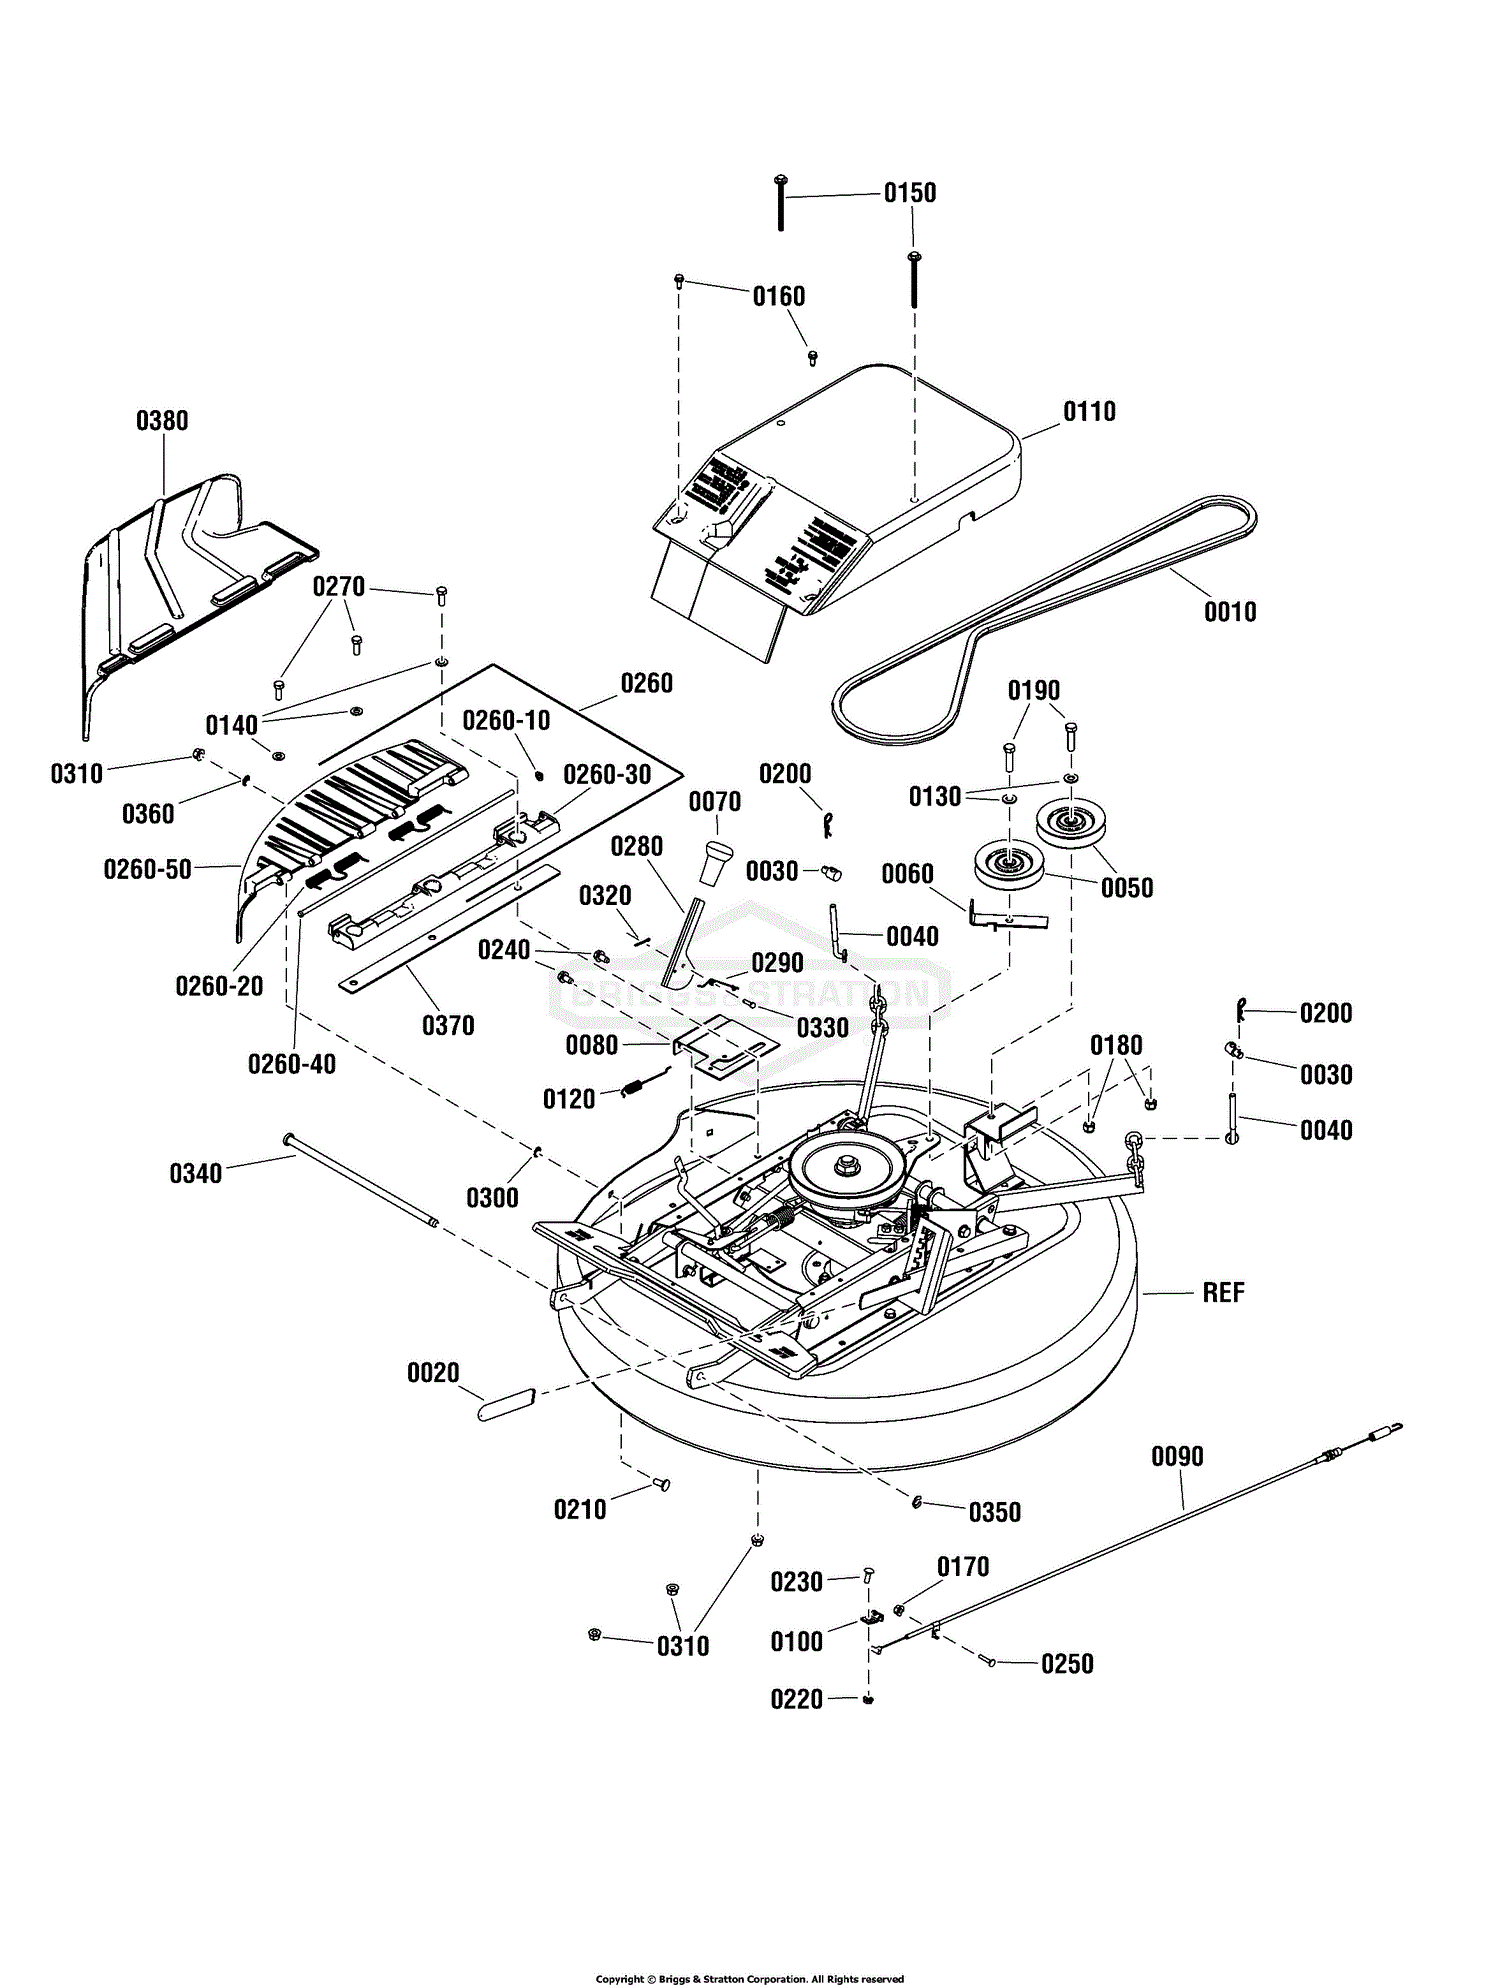 33+ Snapper Rear Engine Rider Parts Diagram